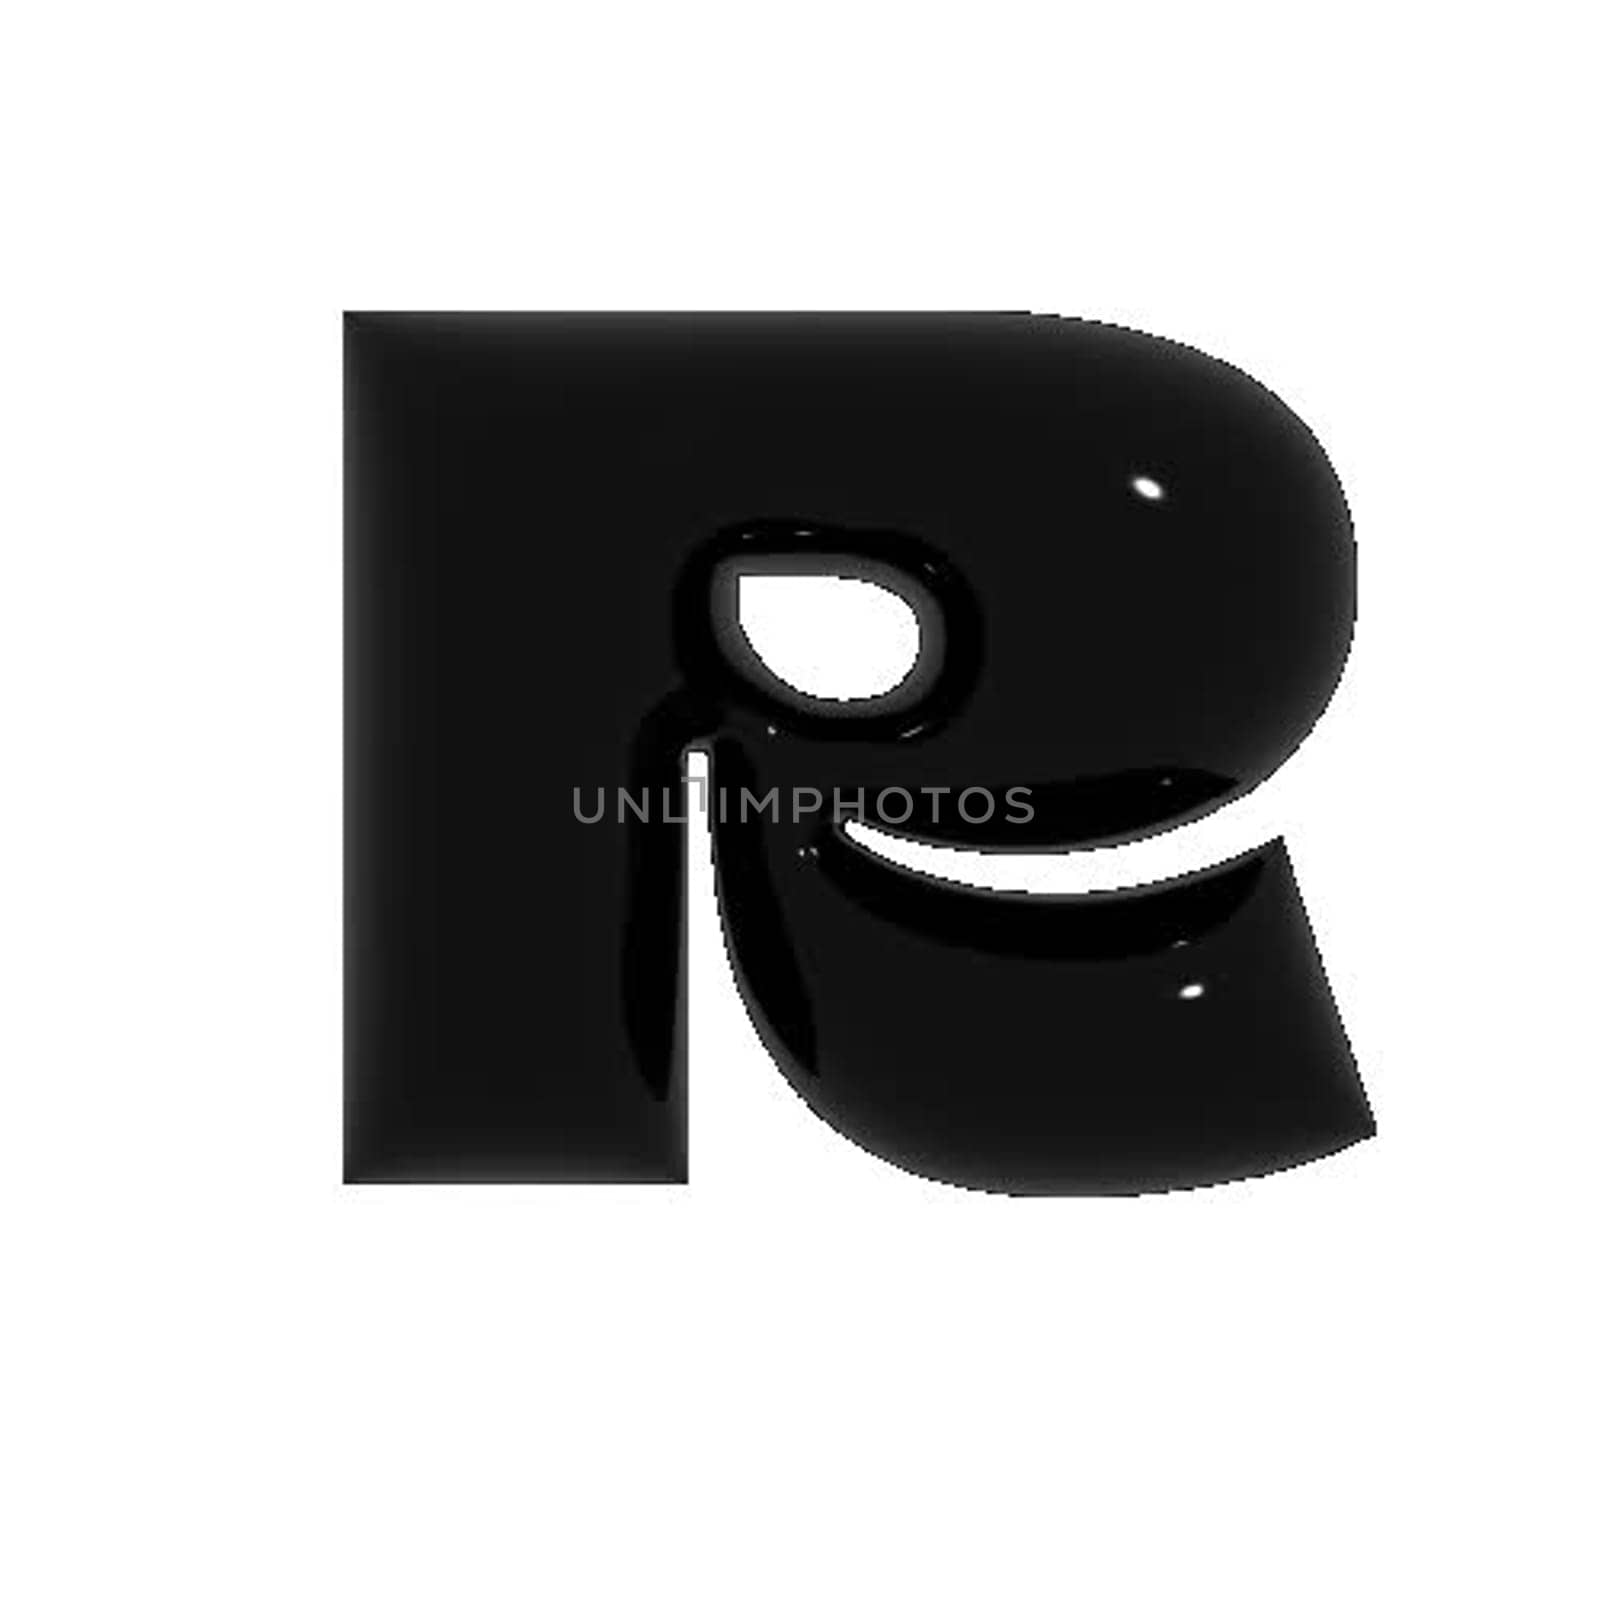 Black metal shiny reflective letter R 3D illustration by Dustick